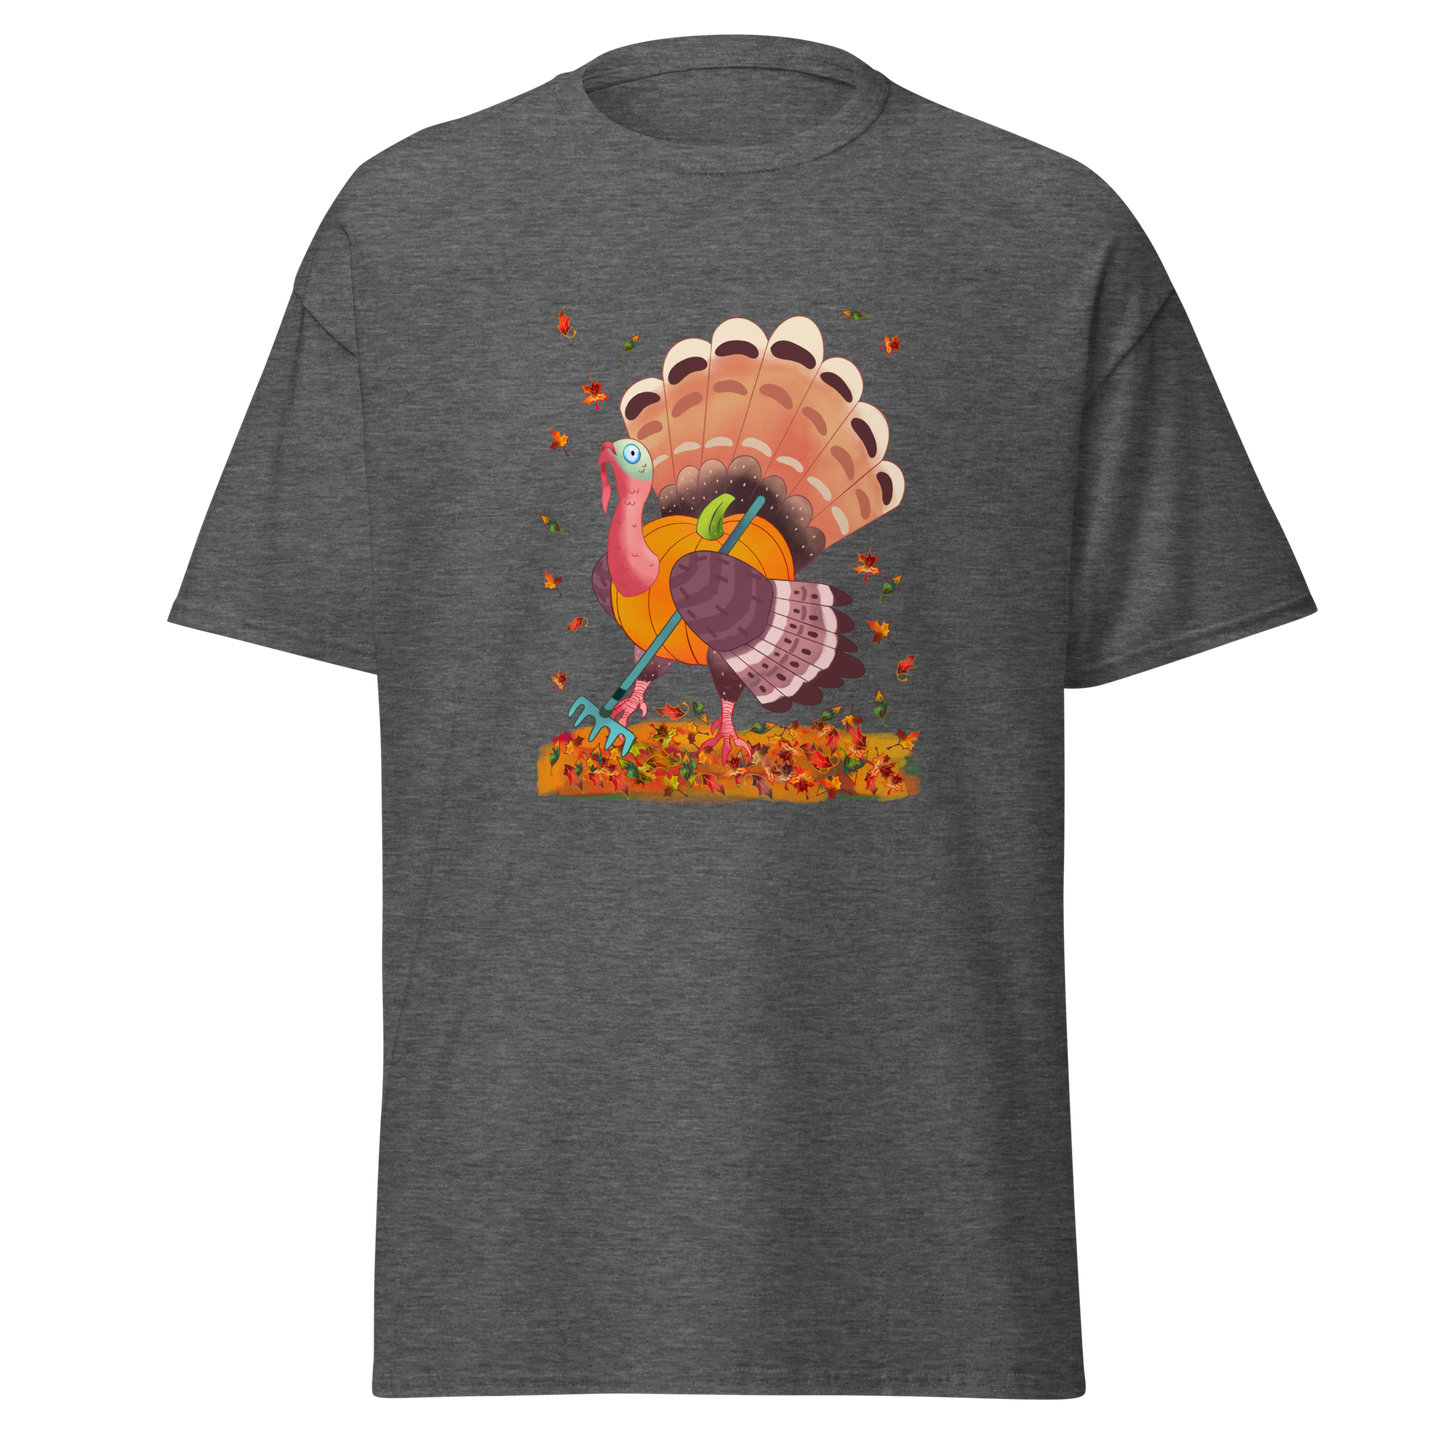 Turkey Yard Work T-Shirt